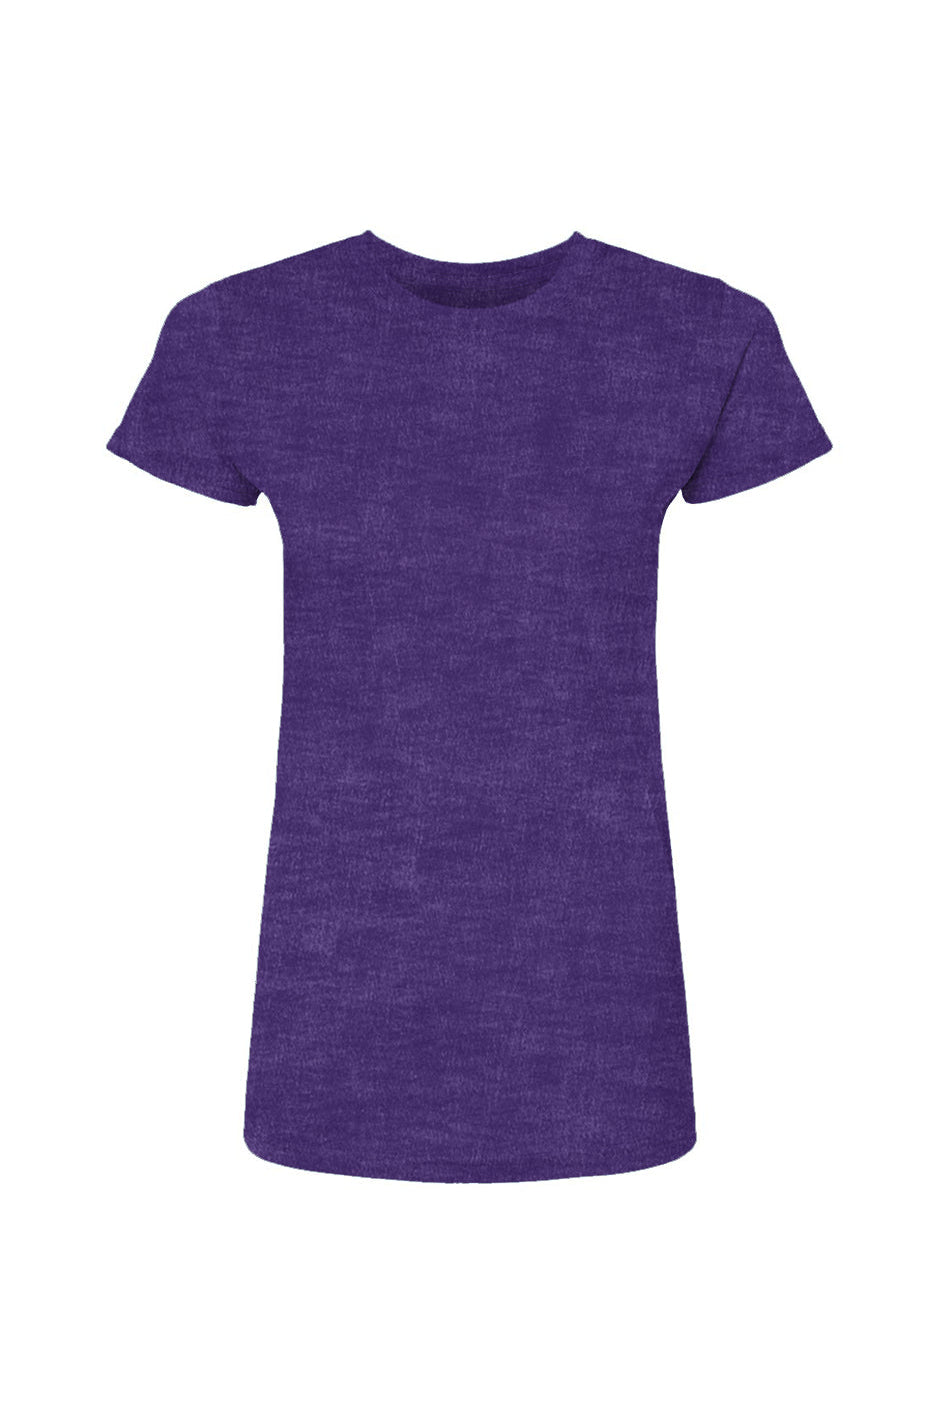 Women's Heather Purple Poly-Rich T-Shirt - Women's T-shirt - Apliiq - Women's Heather Purple Poly-Rich T-Shirt - APQ-4654339S5A0 - xs - heather purple - Comfortable fine knit jersey - Dragon Foxx™ - Durable Women's Apparel